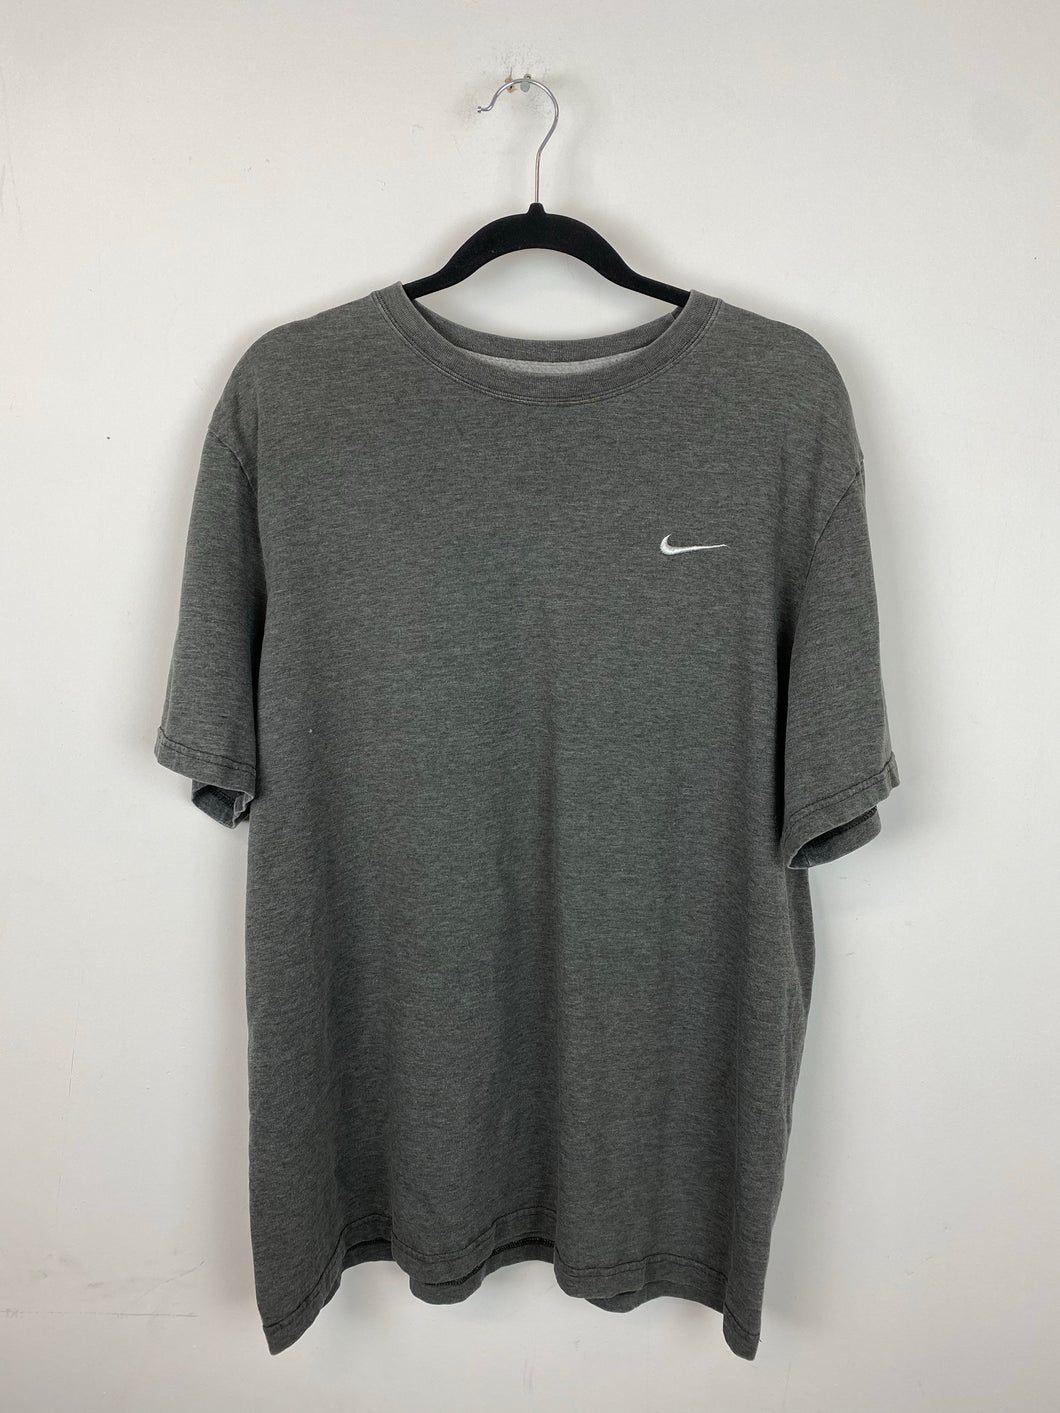 Thin Nike T shirt - L